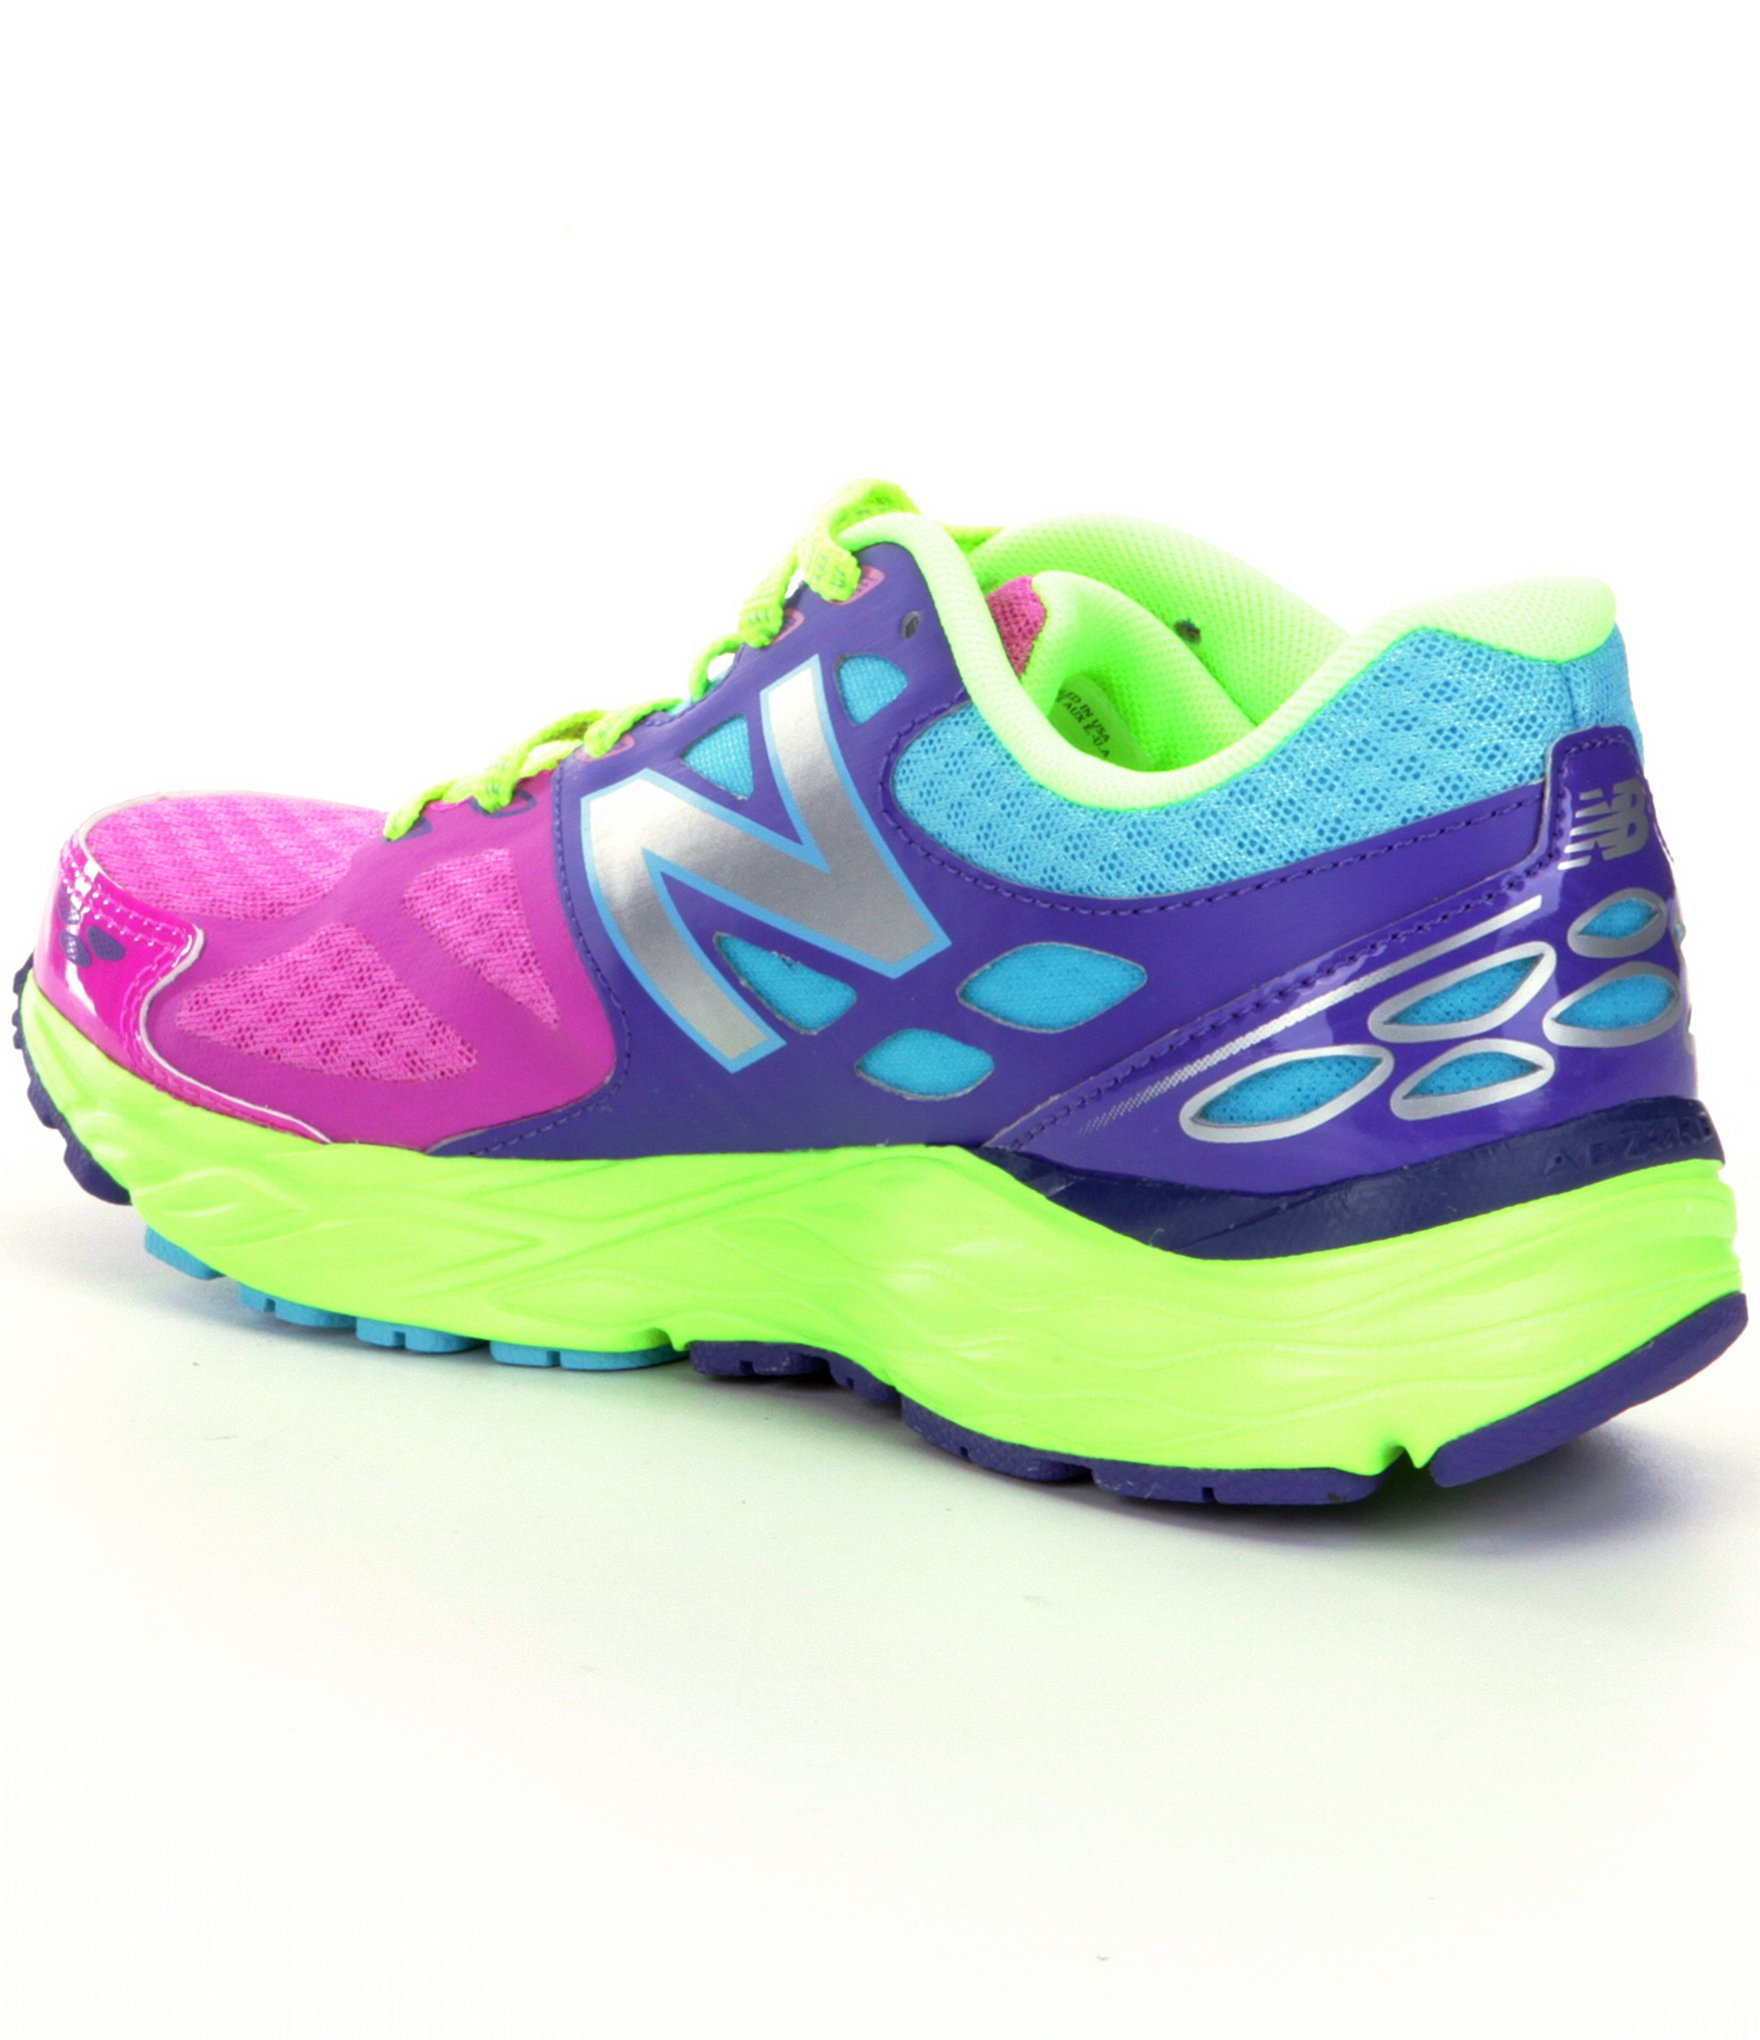 Lyst - New Balance Women's 680 V3 Running Shoes